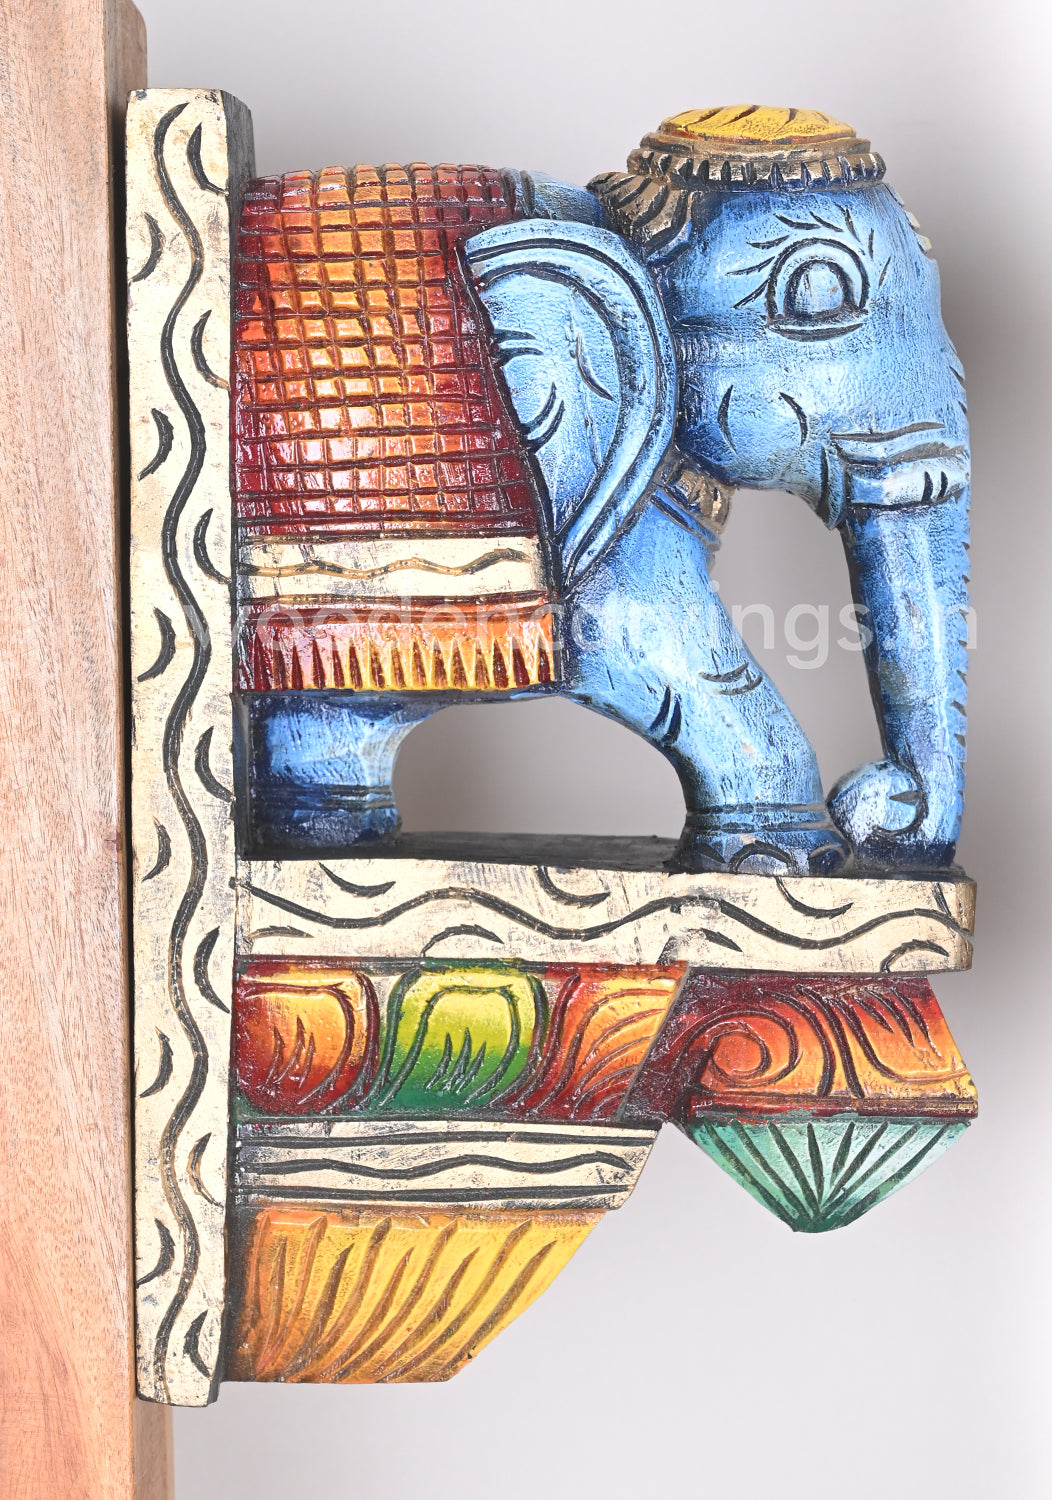 Preety Blue Coloured Elephant Door Decor Wooden Wall Brackets 12"